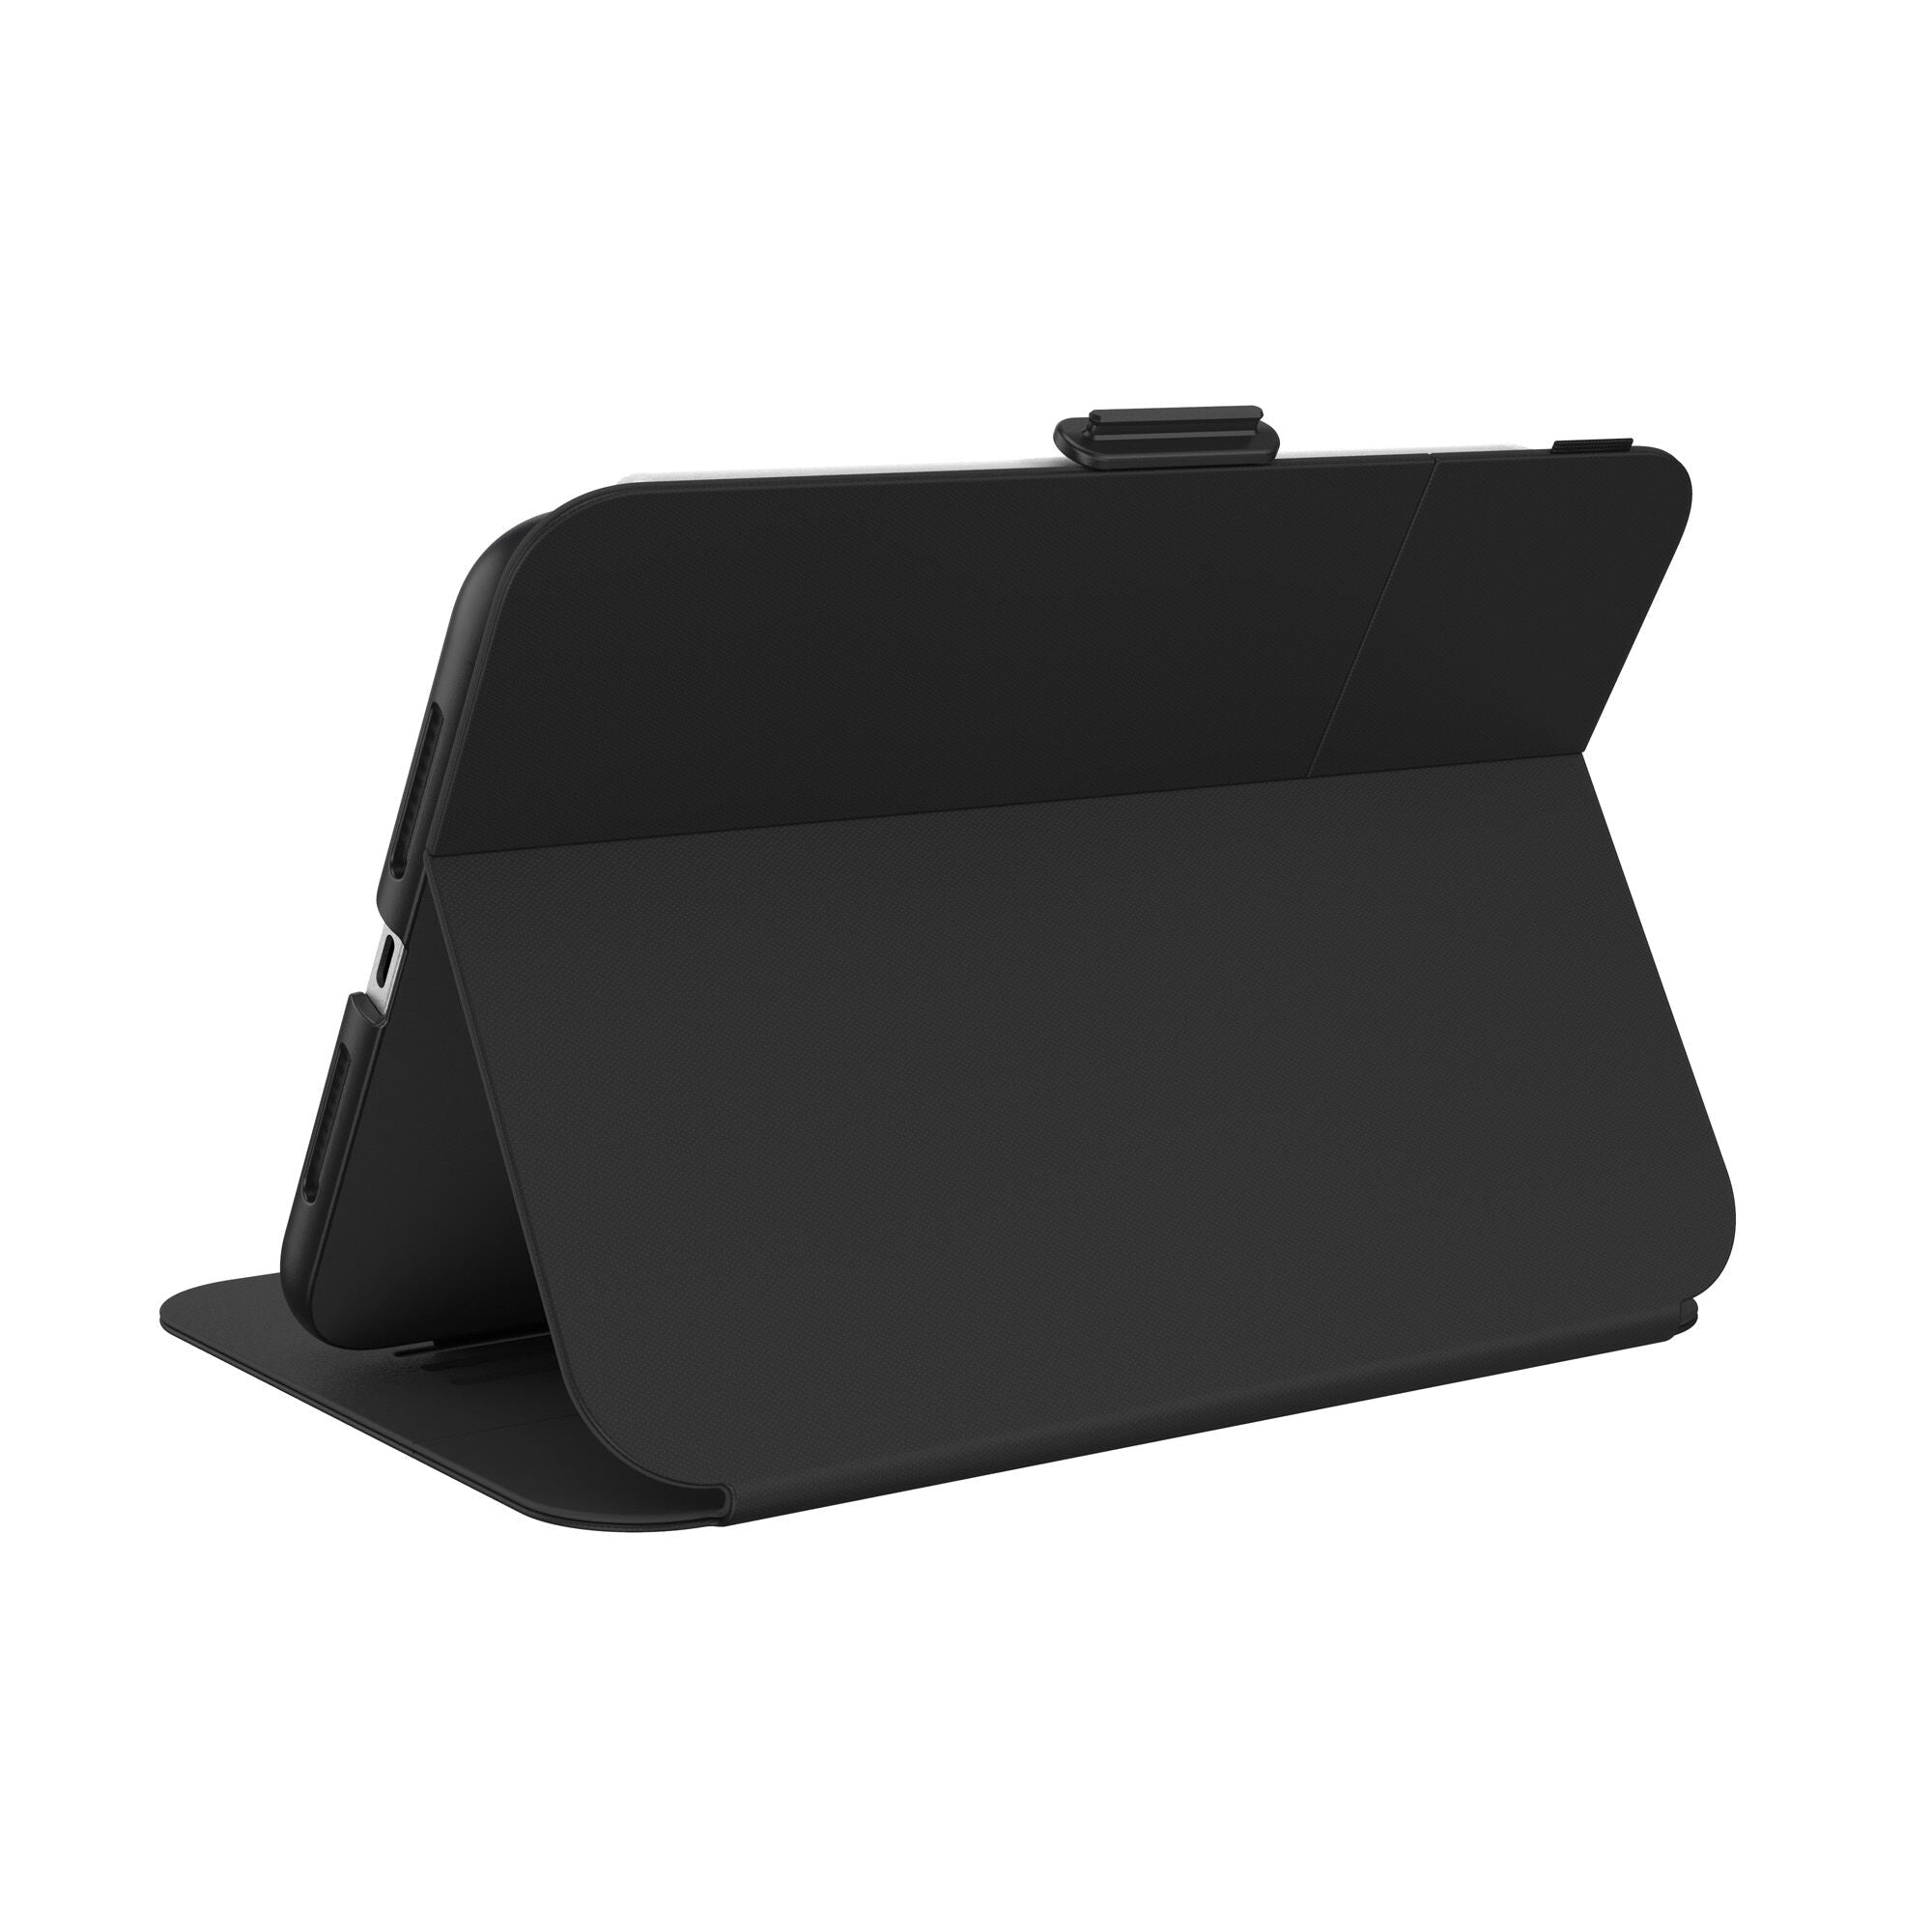 Speck Balance Folio Case for iPad Mini (2021), Black